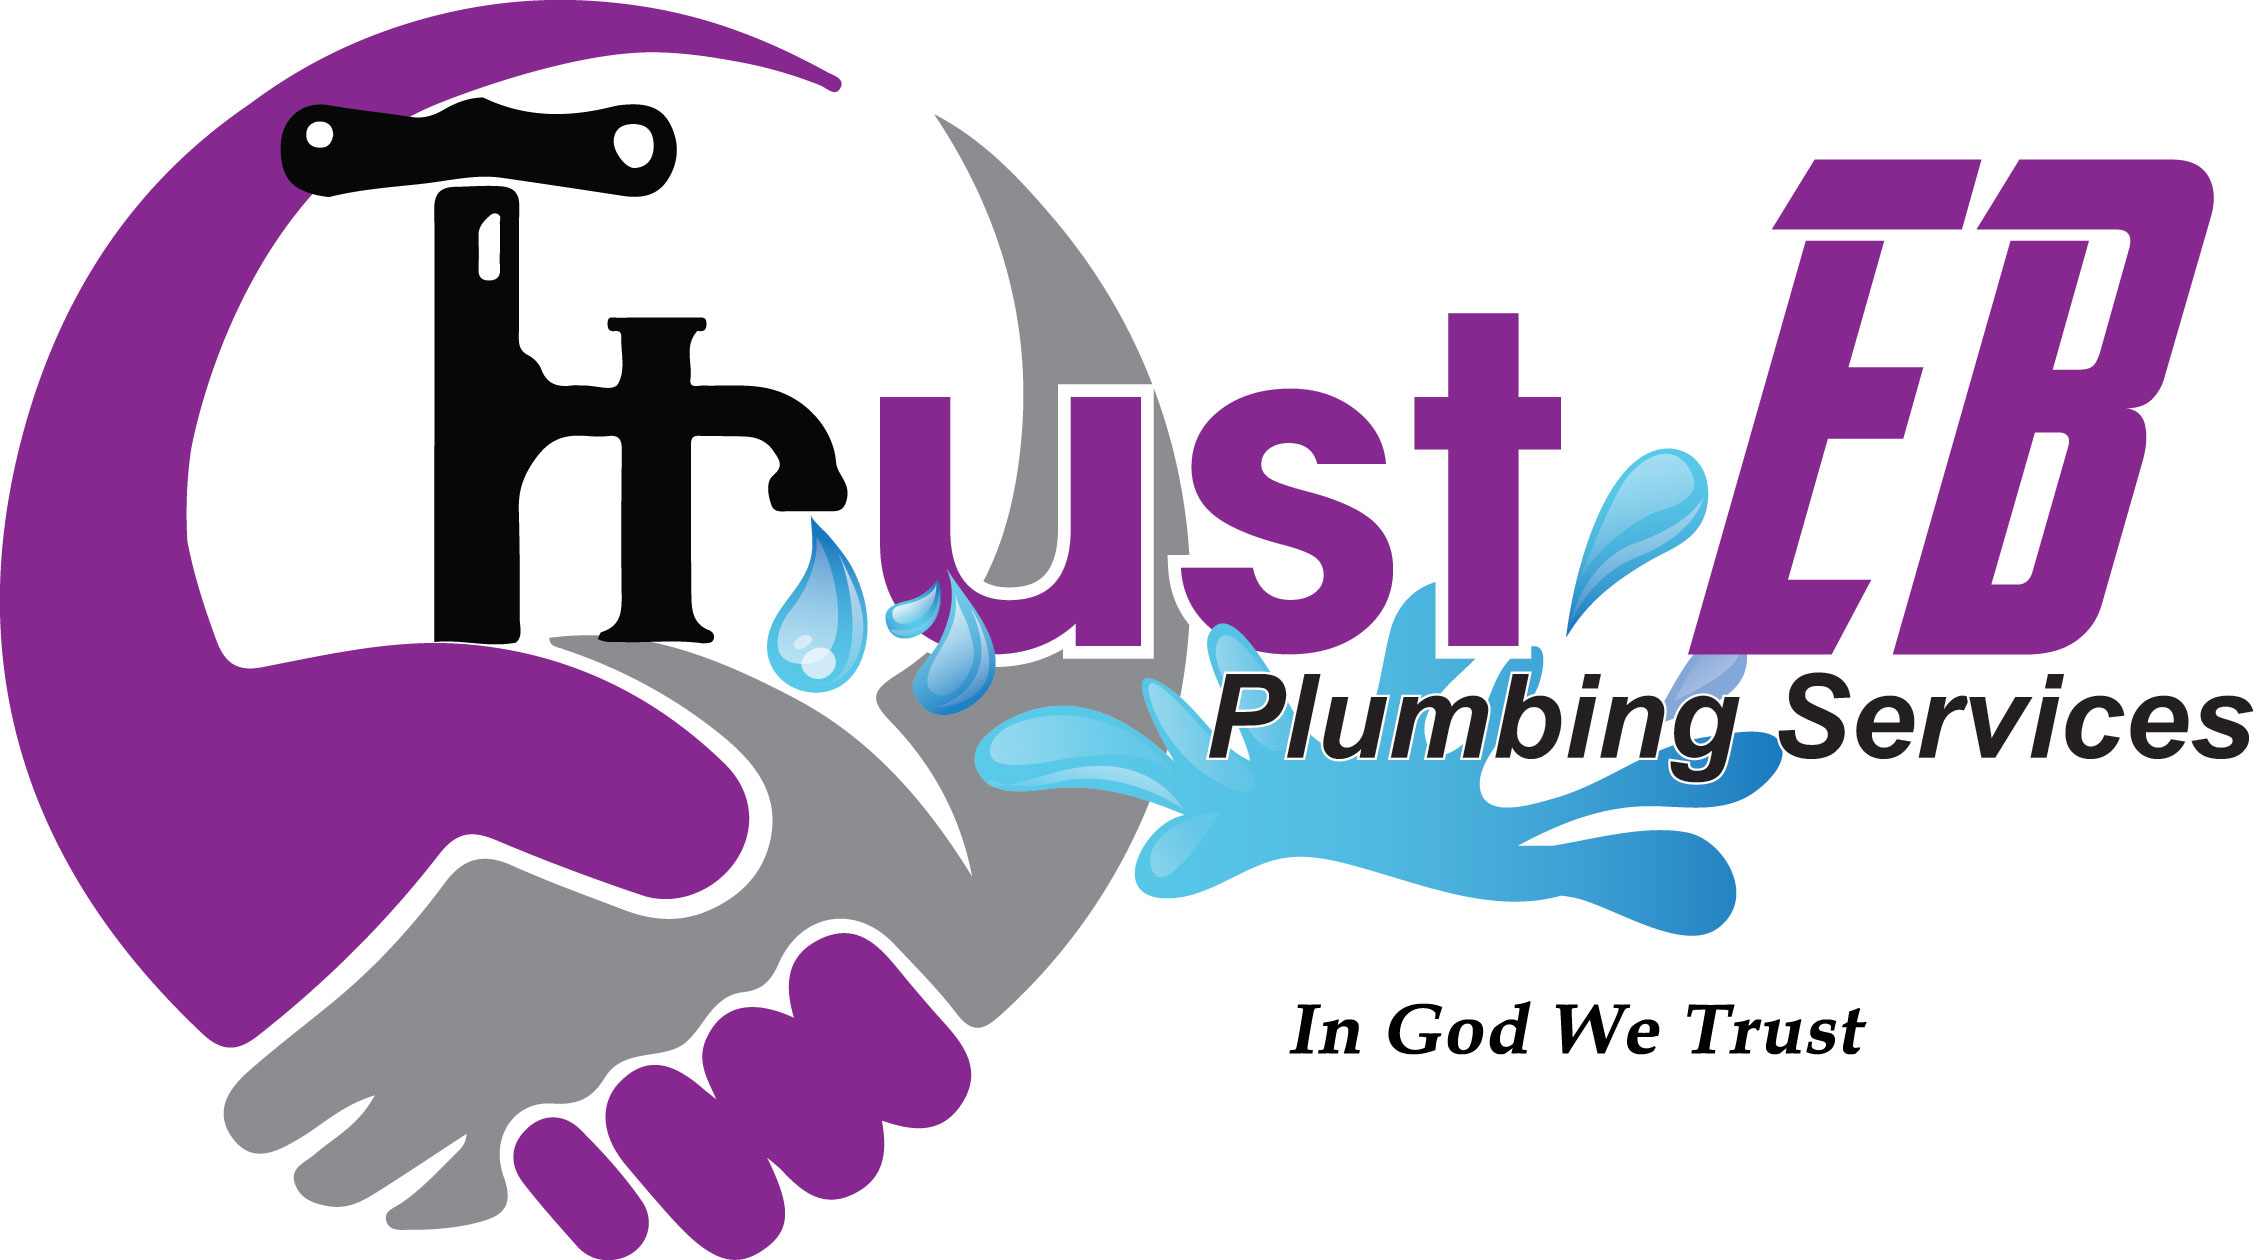 Trust EB Plumbing Services, LLC Logo